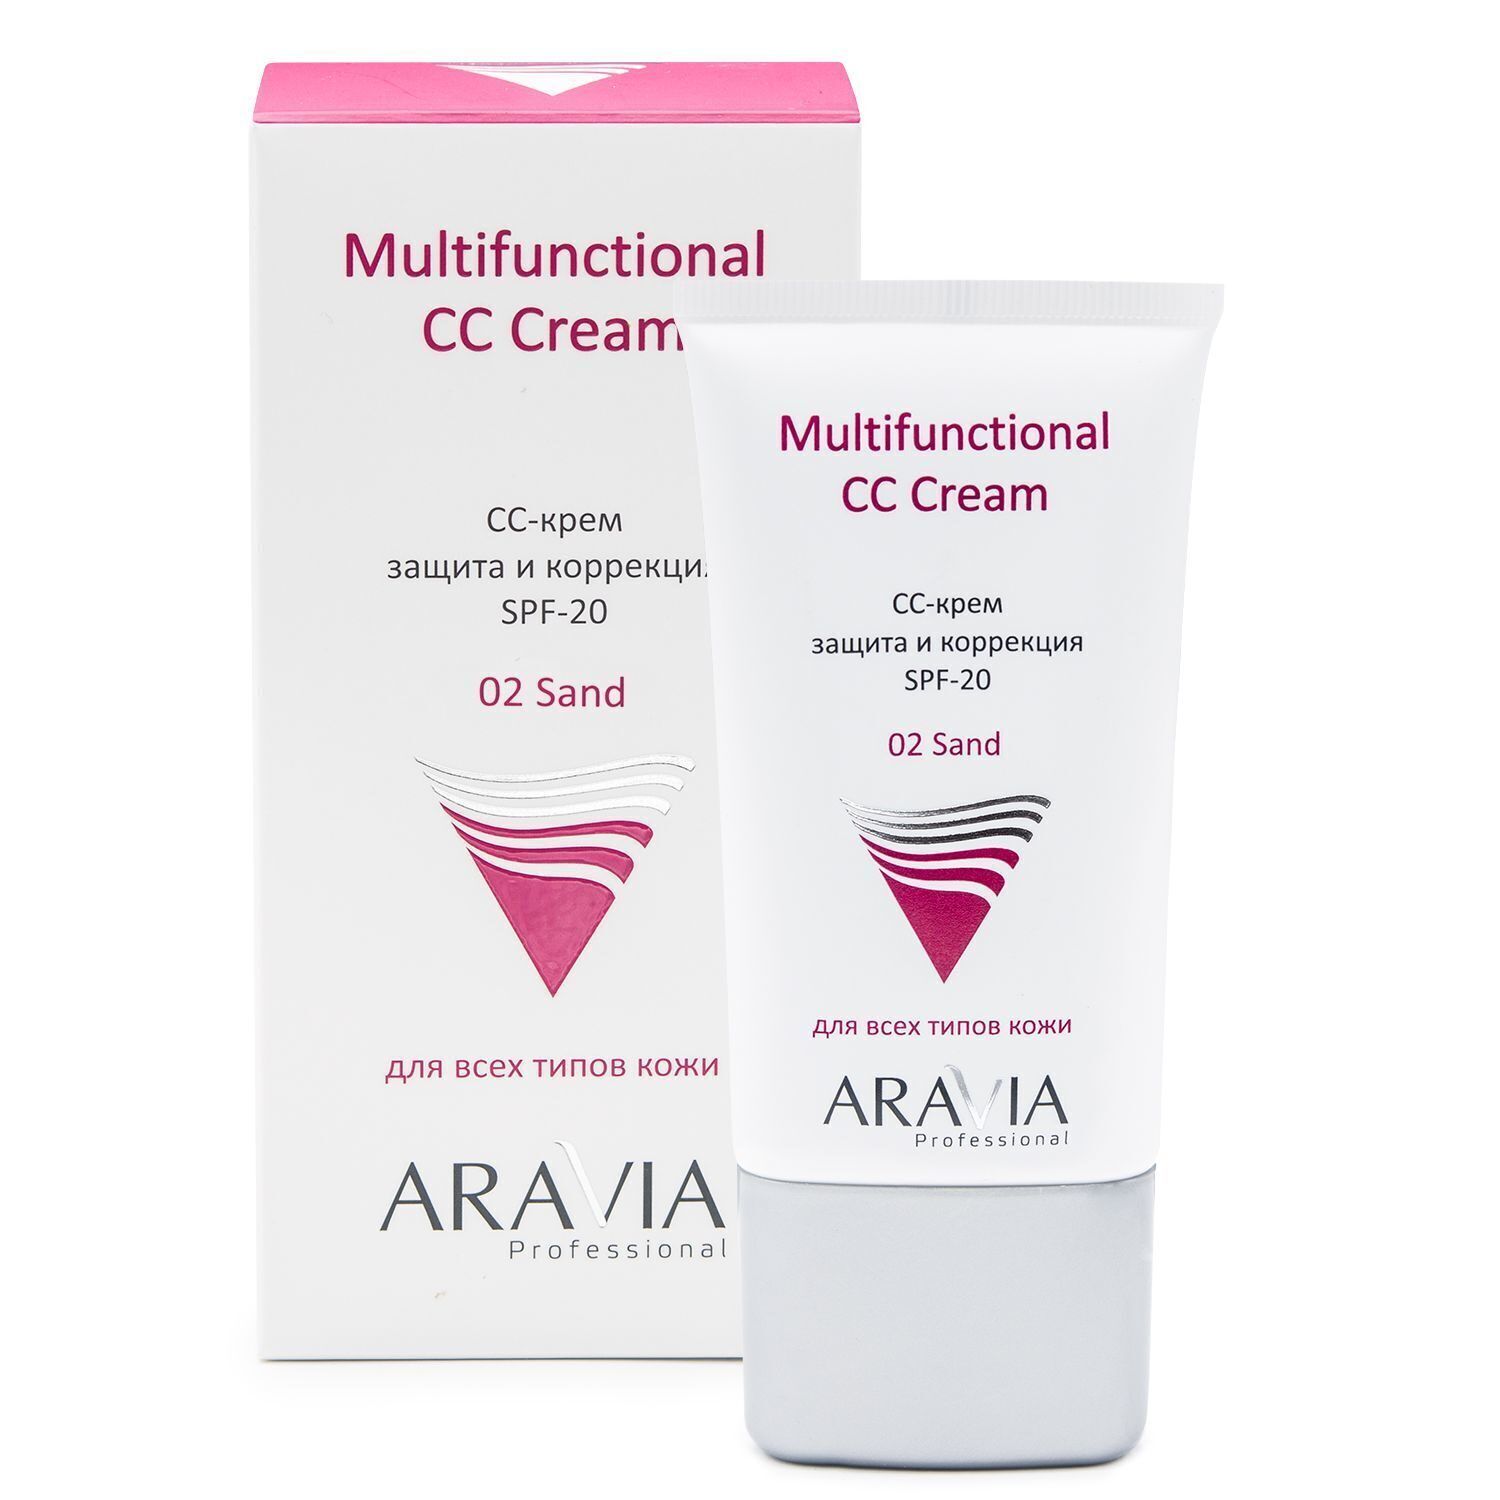 СС-крем защитный SPF-20 Multifunctional CC Cream, Cream Sand 02, 150 мл, ARAVIA Professional